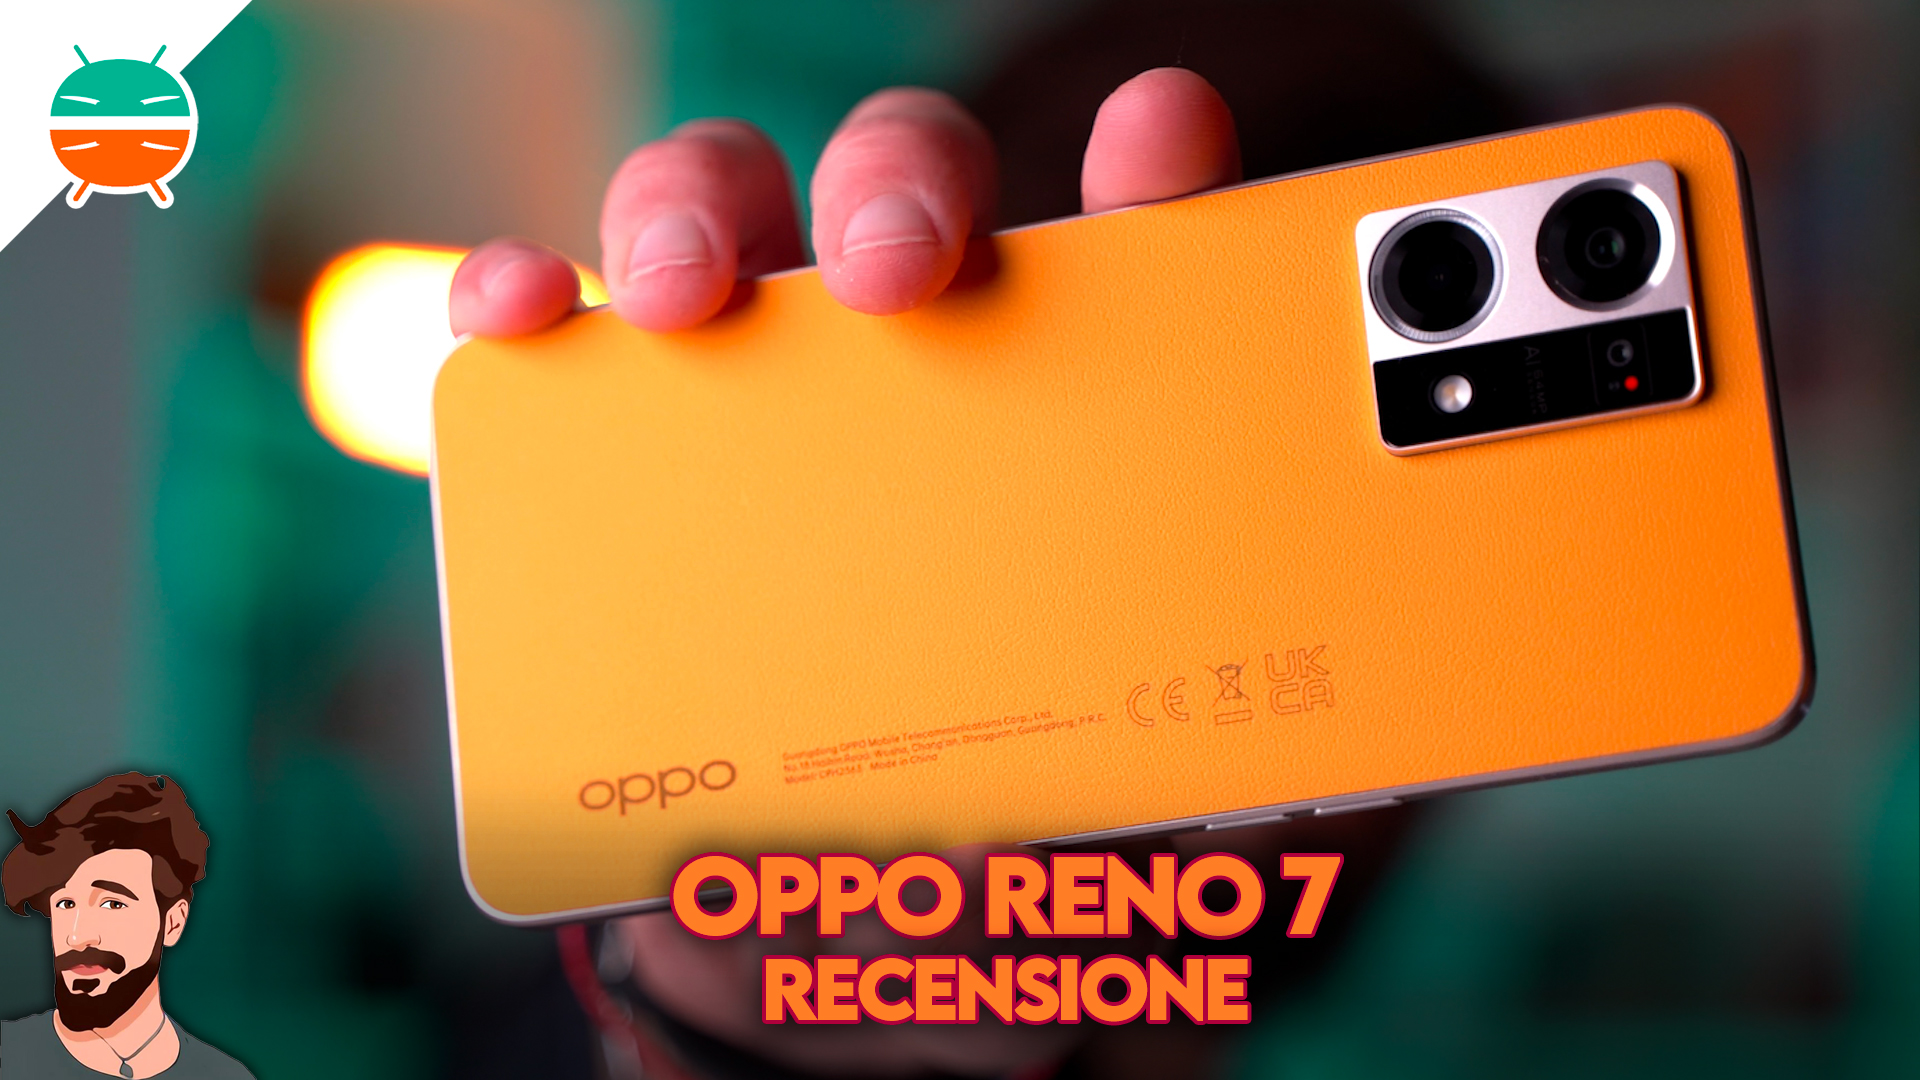 OPPO Reno 7 review: focus EVERYTHING on design - GizChina.it